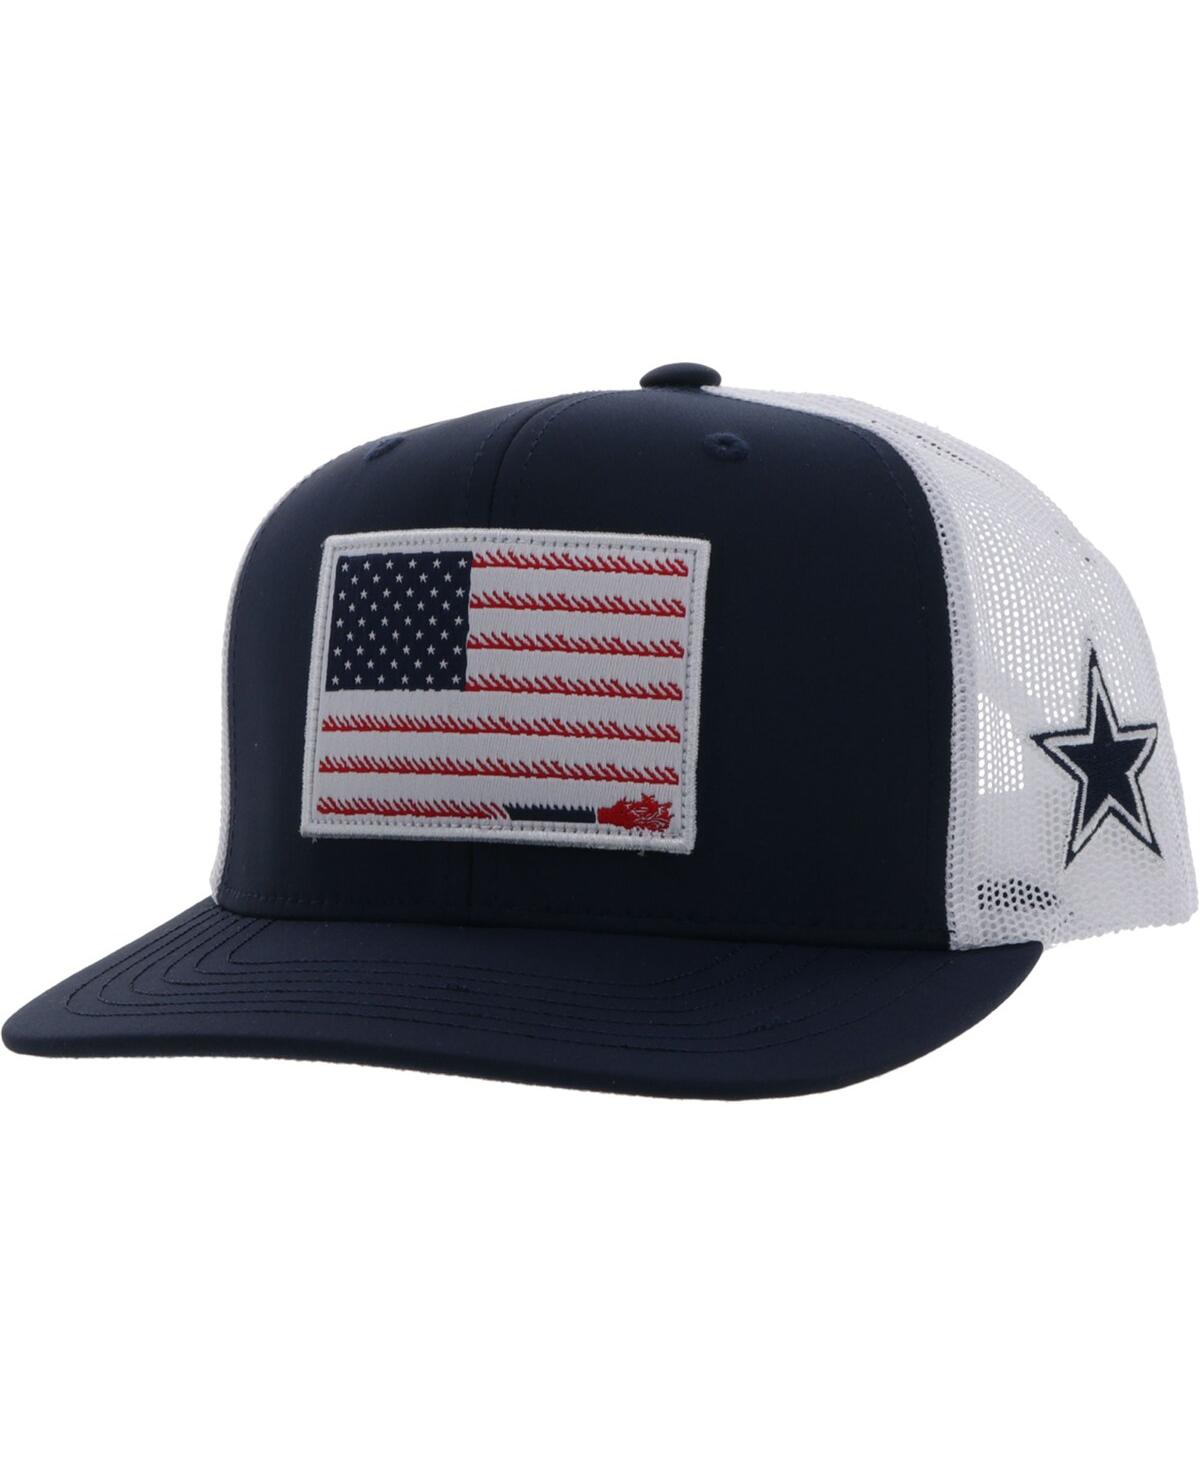 Men's Hooey Navy, White Dallas Cowboys Rope Flag Trucker Adjustable Hat - Navy, White